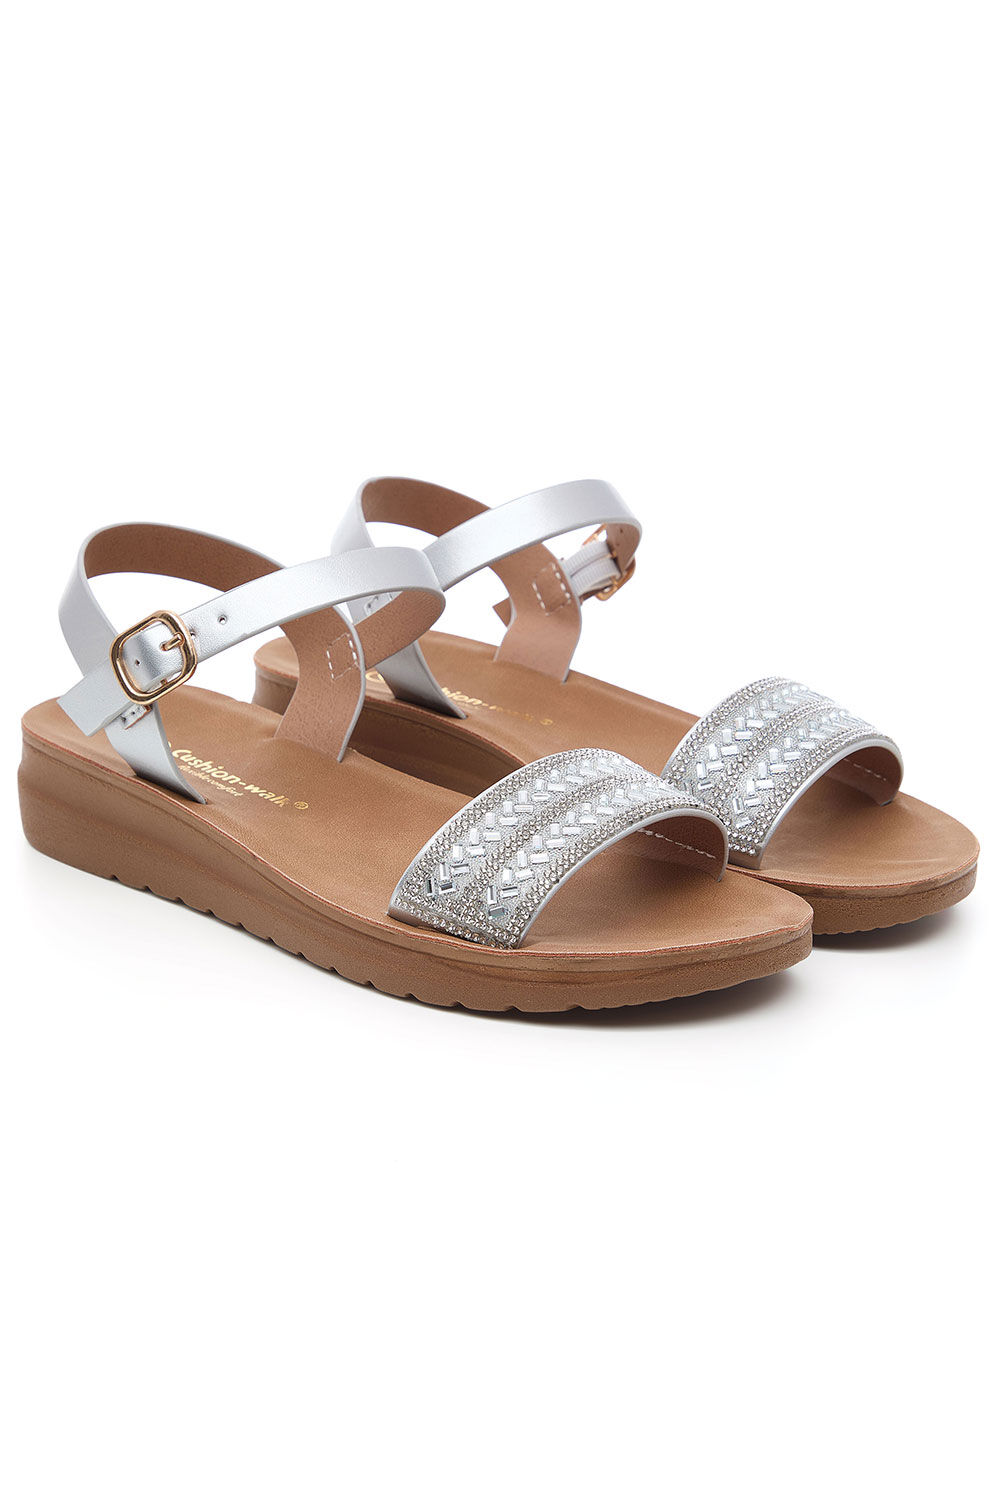 Bonmarche Silver Diamante Strap Flat Sandals With Ankle Buckle Detail, Size: 5